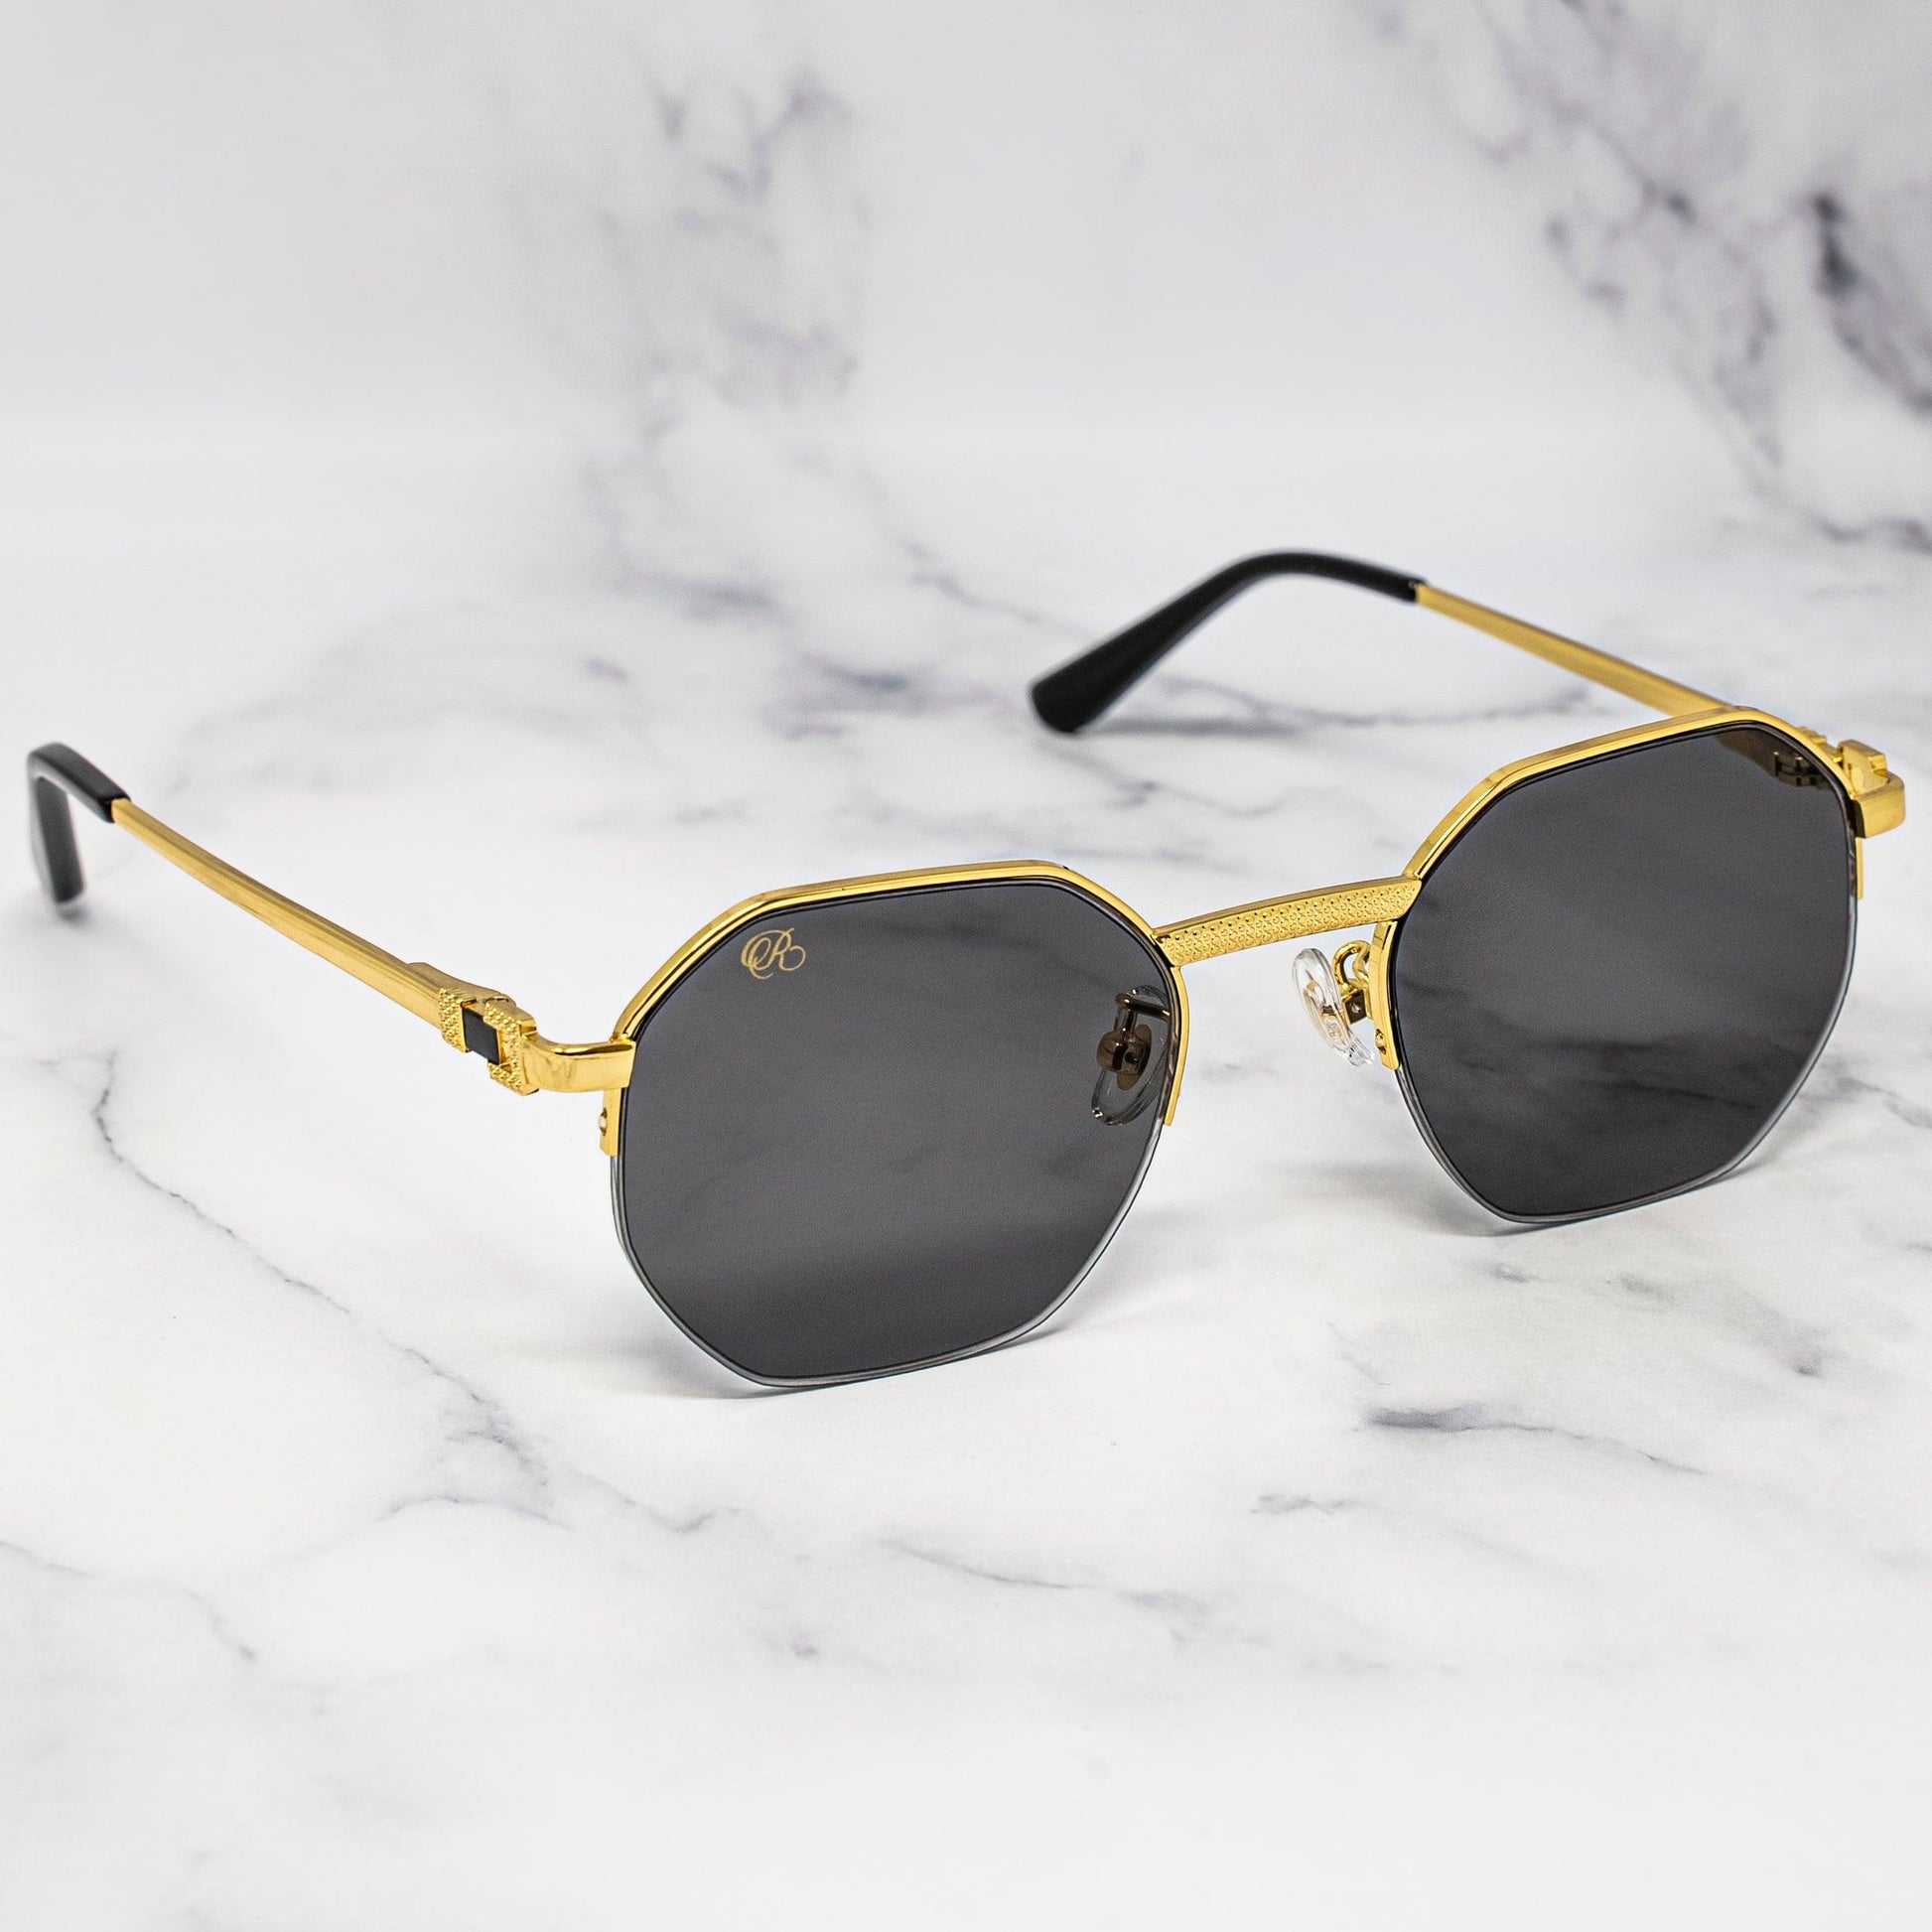 THE REGAL - BLACK GOLD - Rasa Sunglasses